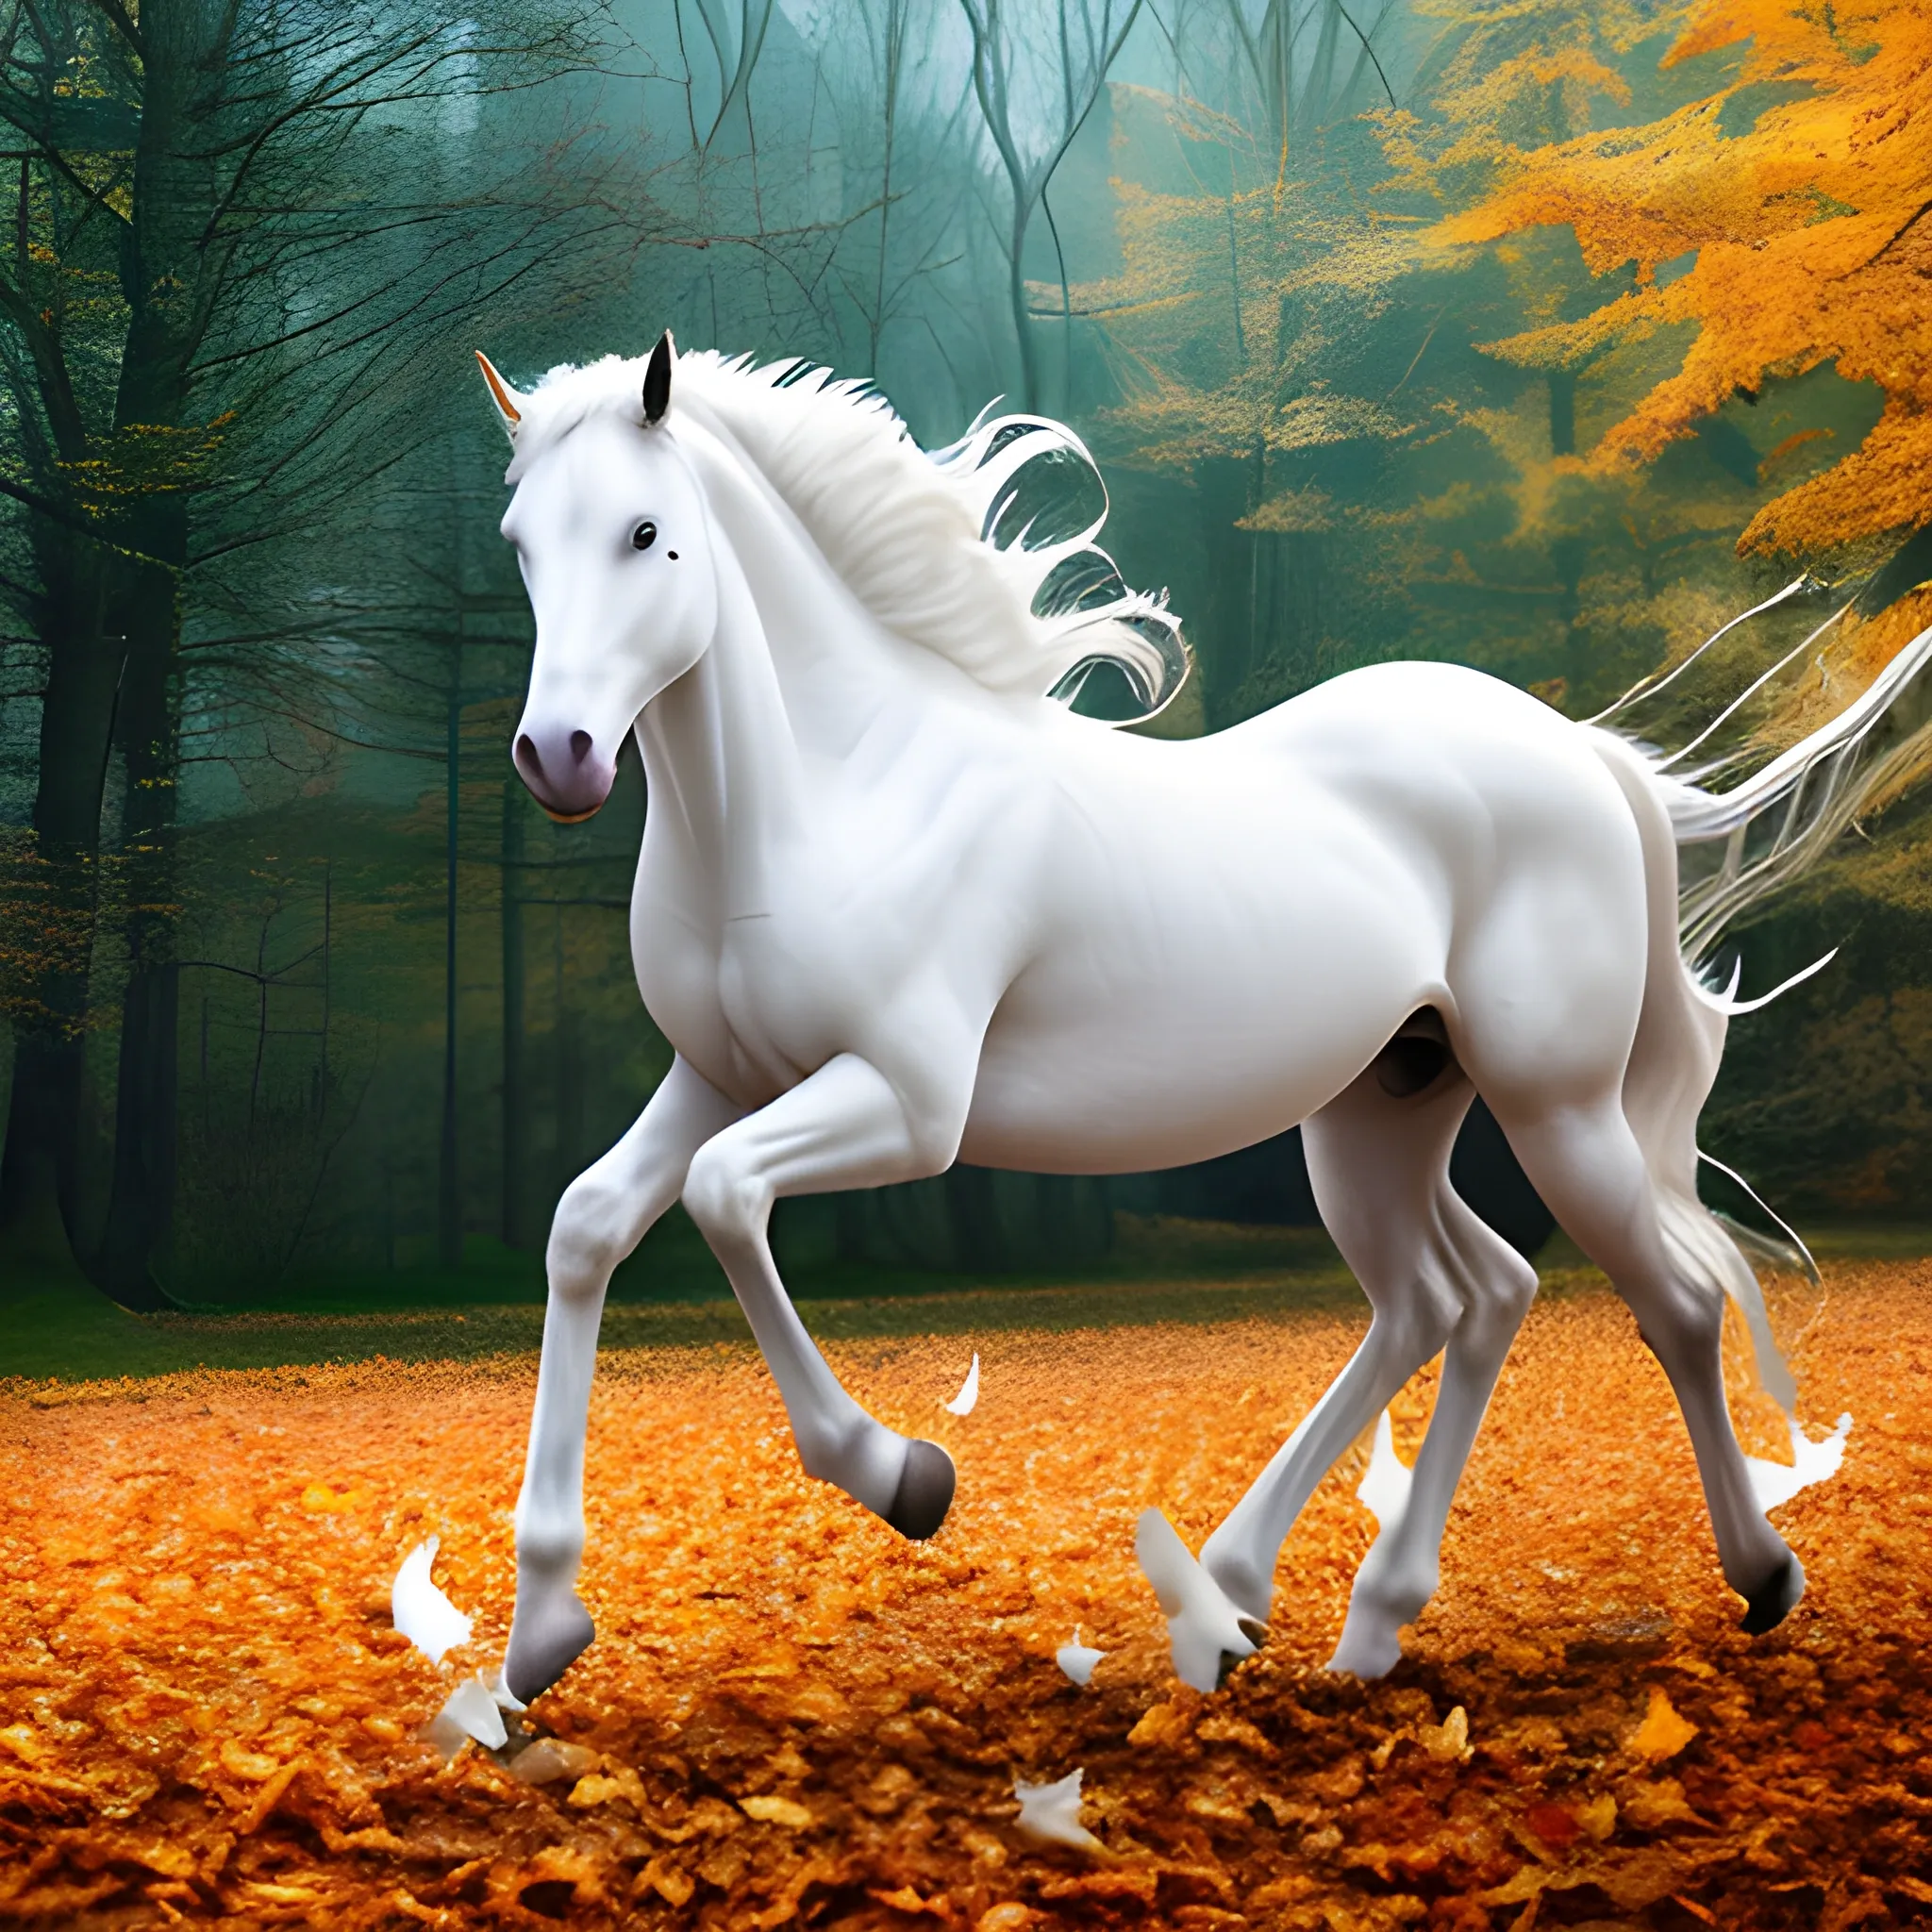 Modern girls, white horses, fallen leaves, long hair flowing, dramatic, realistic, dynamic, high-definition, beautiful